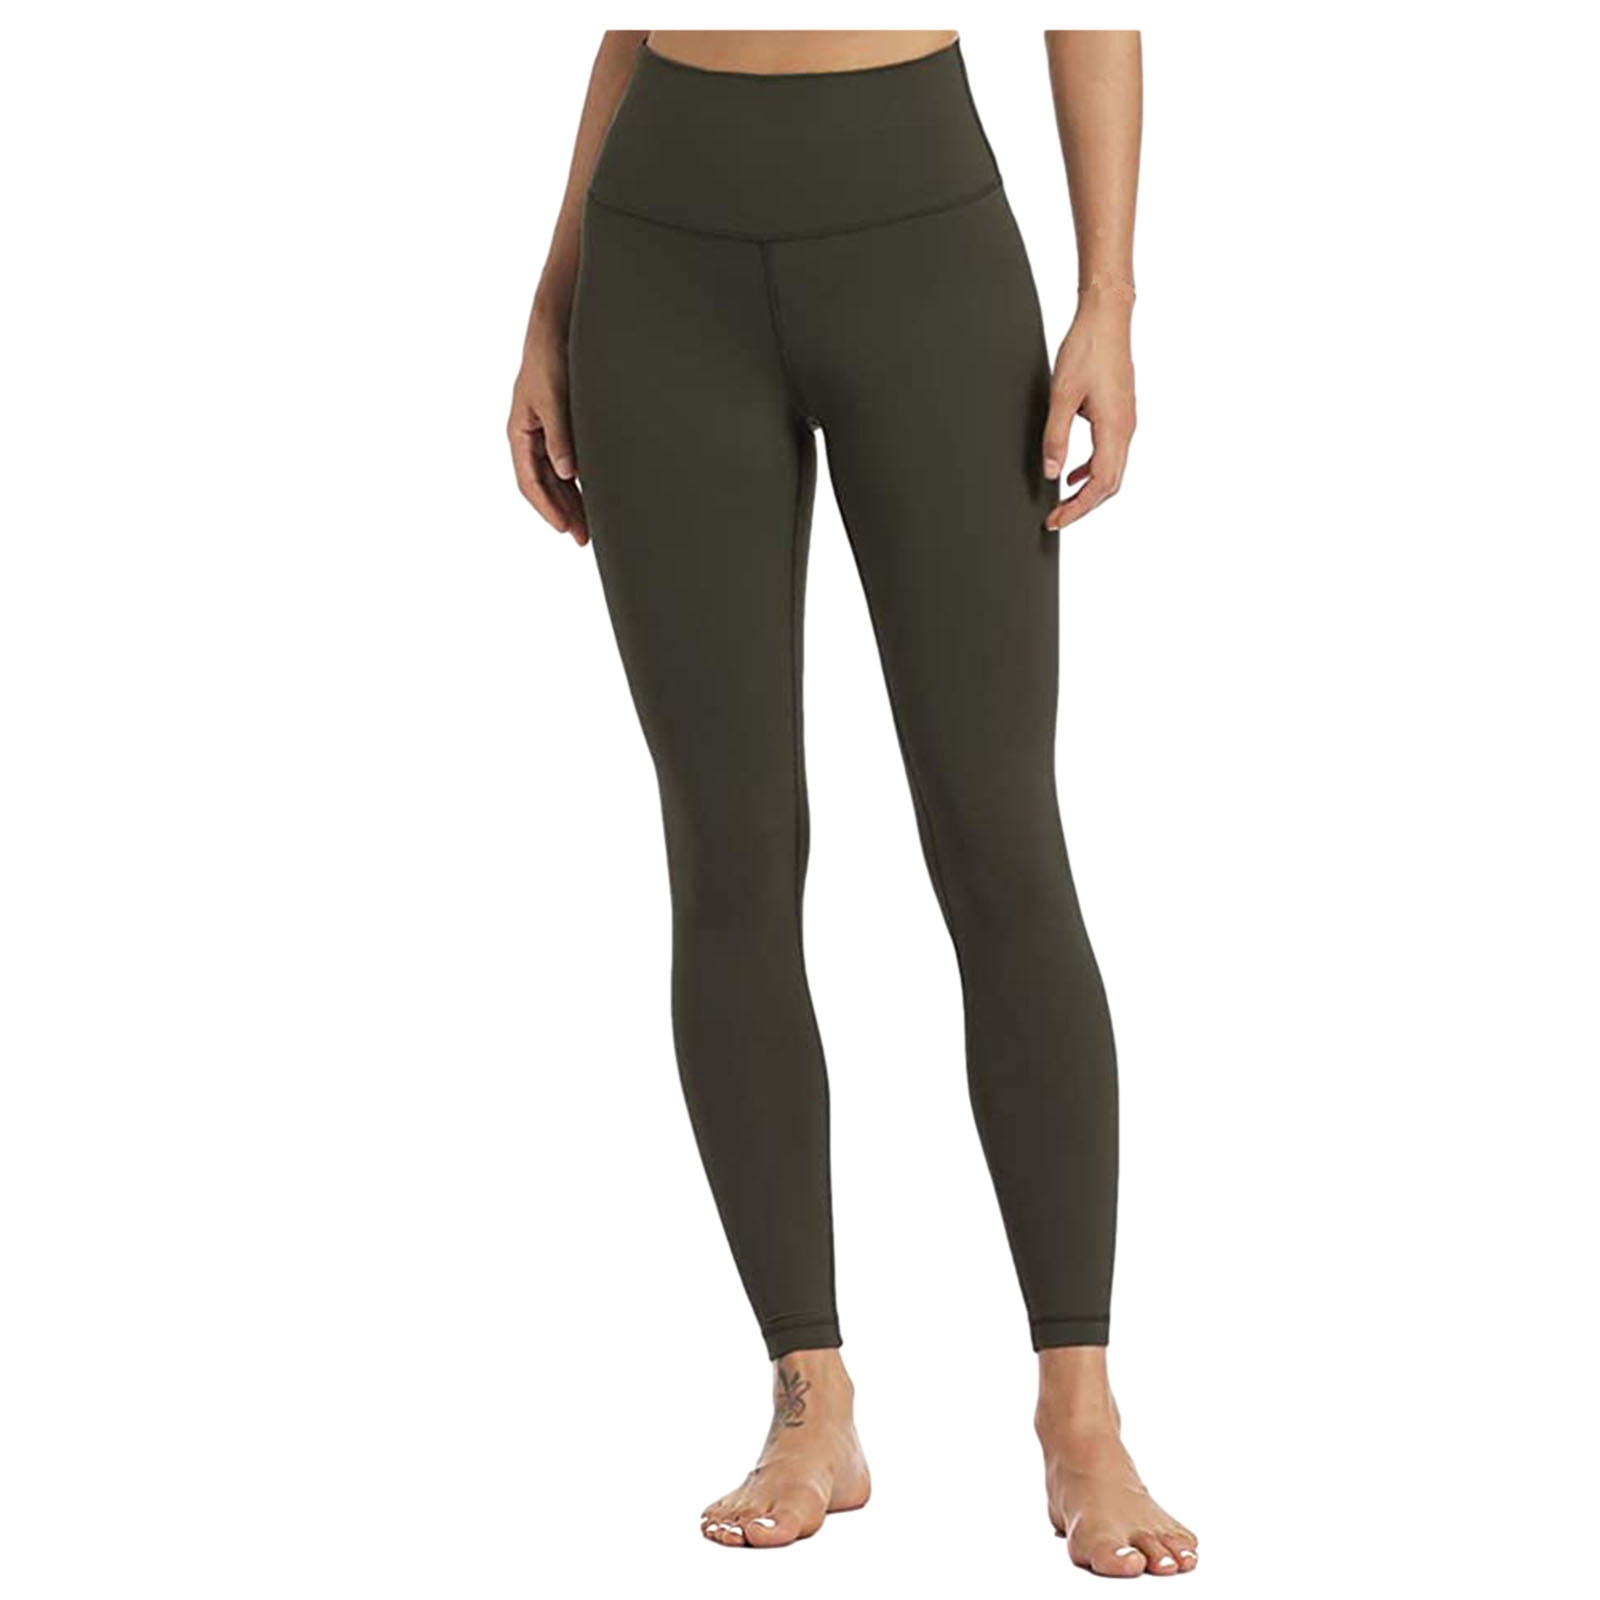 ZXHACSJ Women's High Waist Solid Color Tight Fitness Yoga Pants Nude Hidden Yoga  Pants Army Green S - Walmart.com